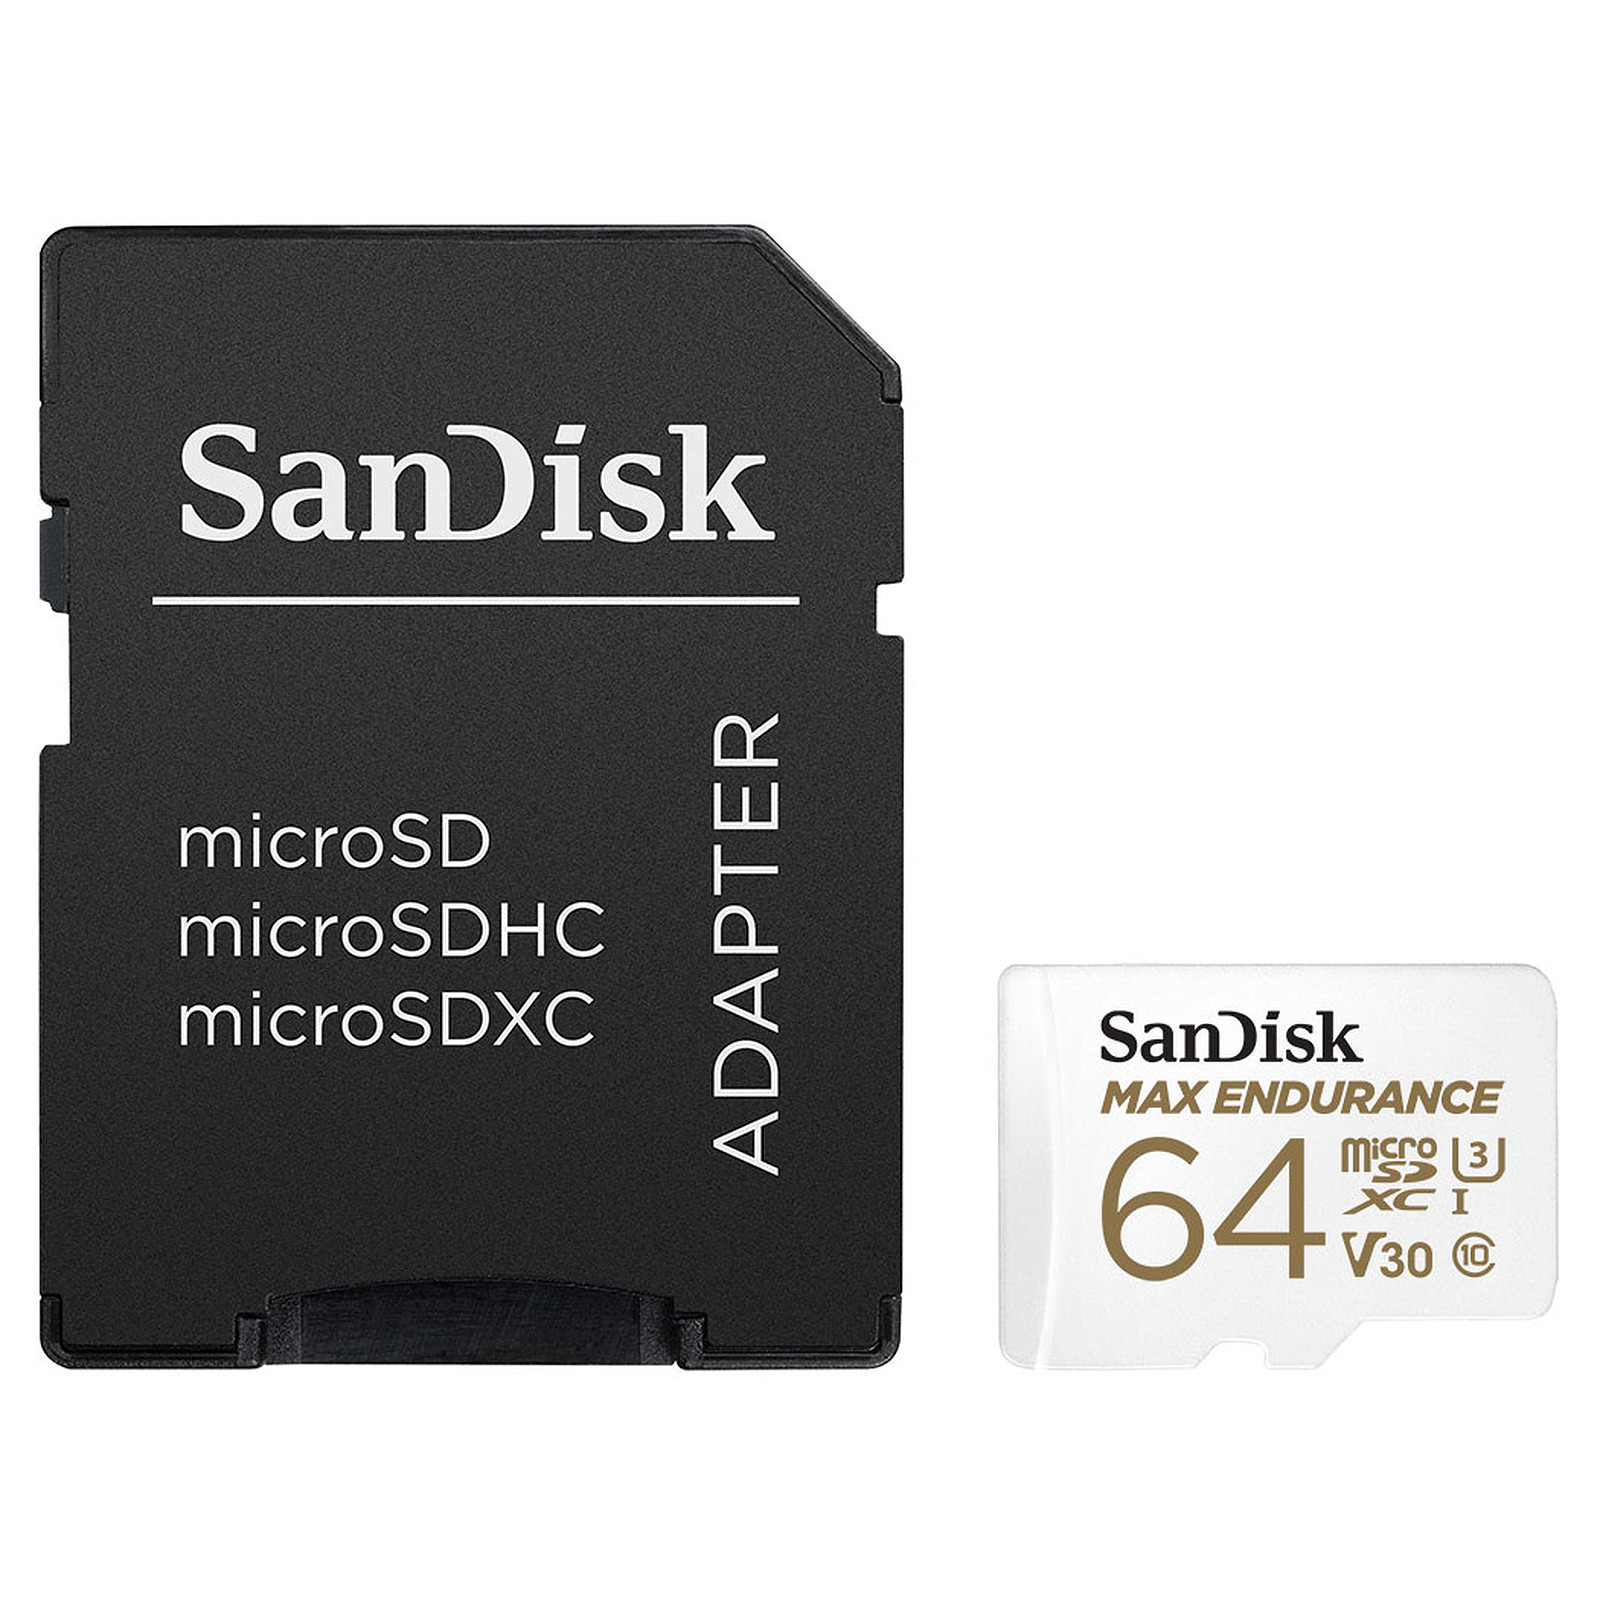 SanDisk Max Endurance microSDXC UHS-I U3 V30 64 Go + Adaptateur SD - Carte memoire Sandisk